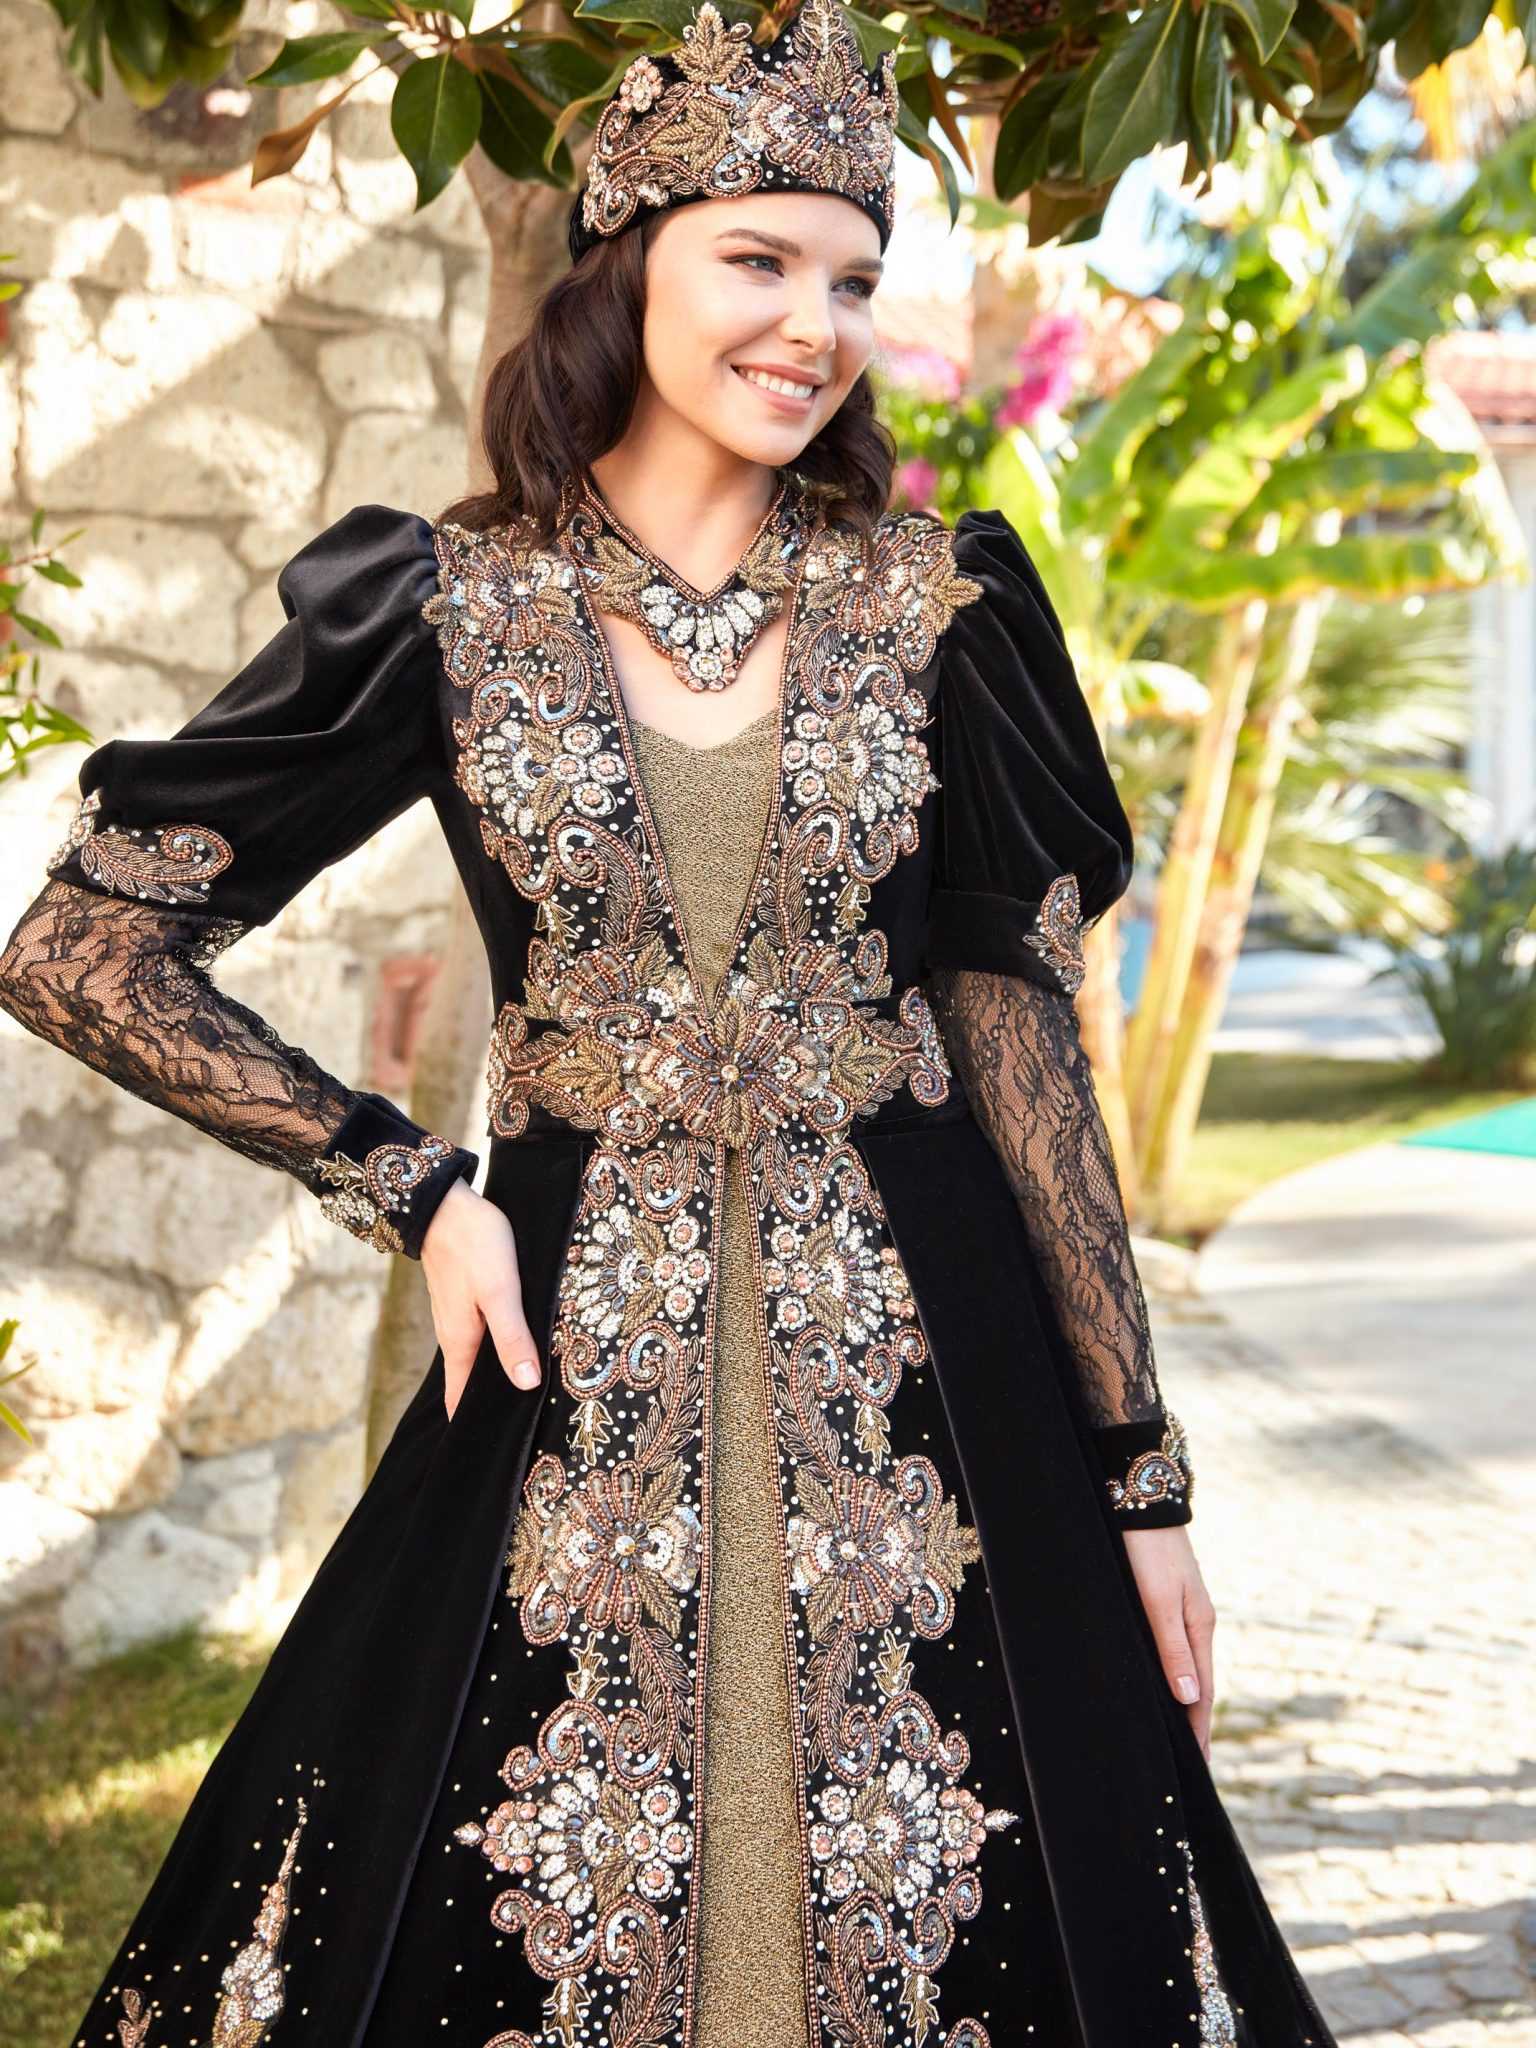 TURKISH CLOTHING | Elven dress, Stunning dresses, Turkish clothing